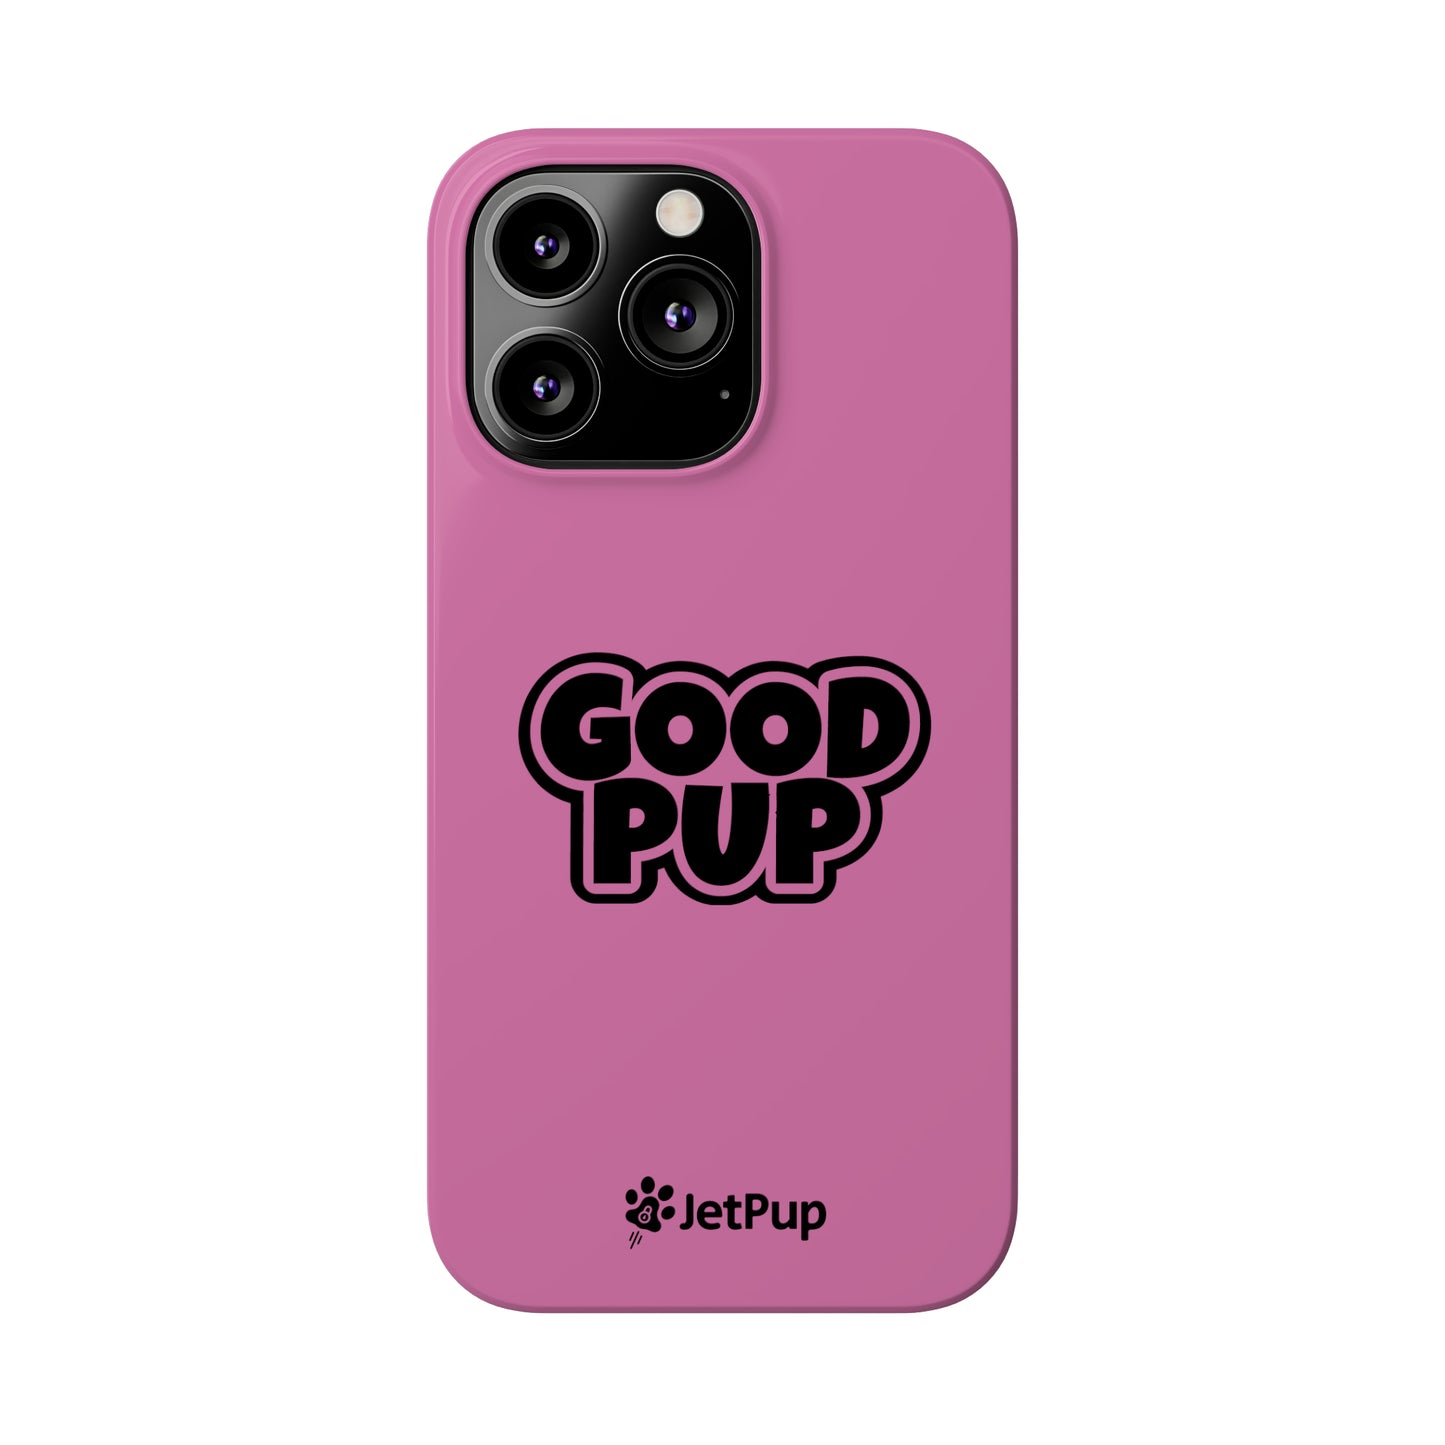 Good Pup Slim iPhone Cases - Pink